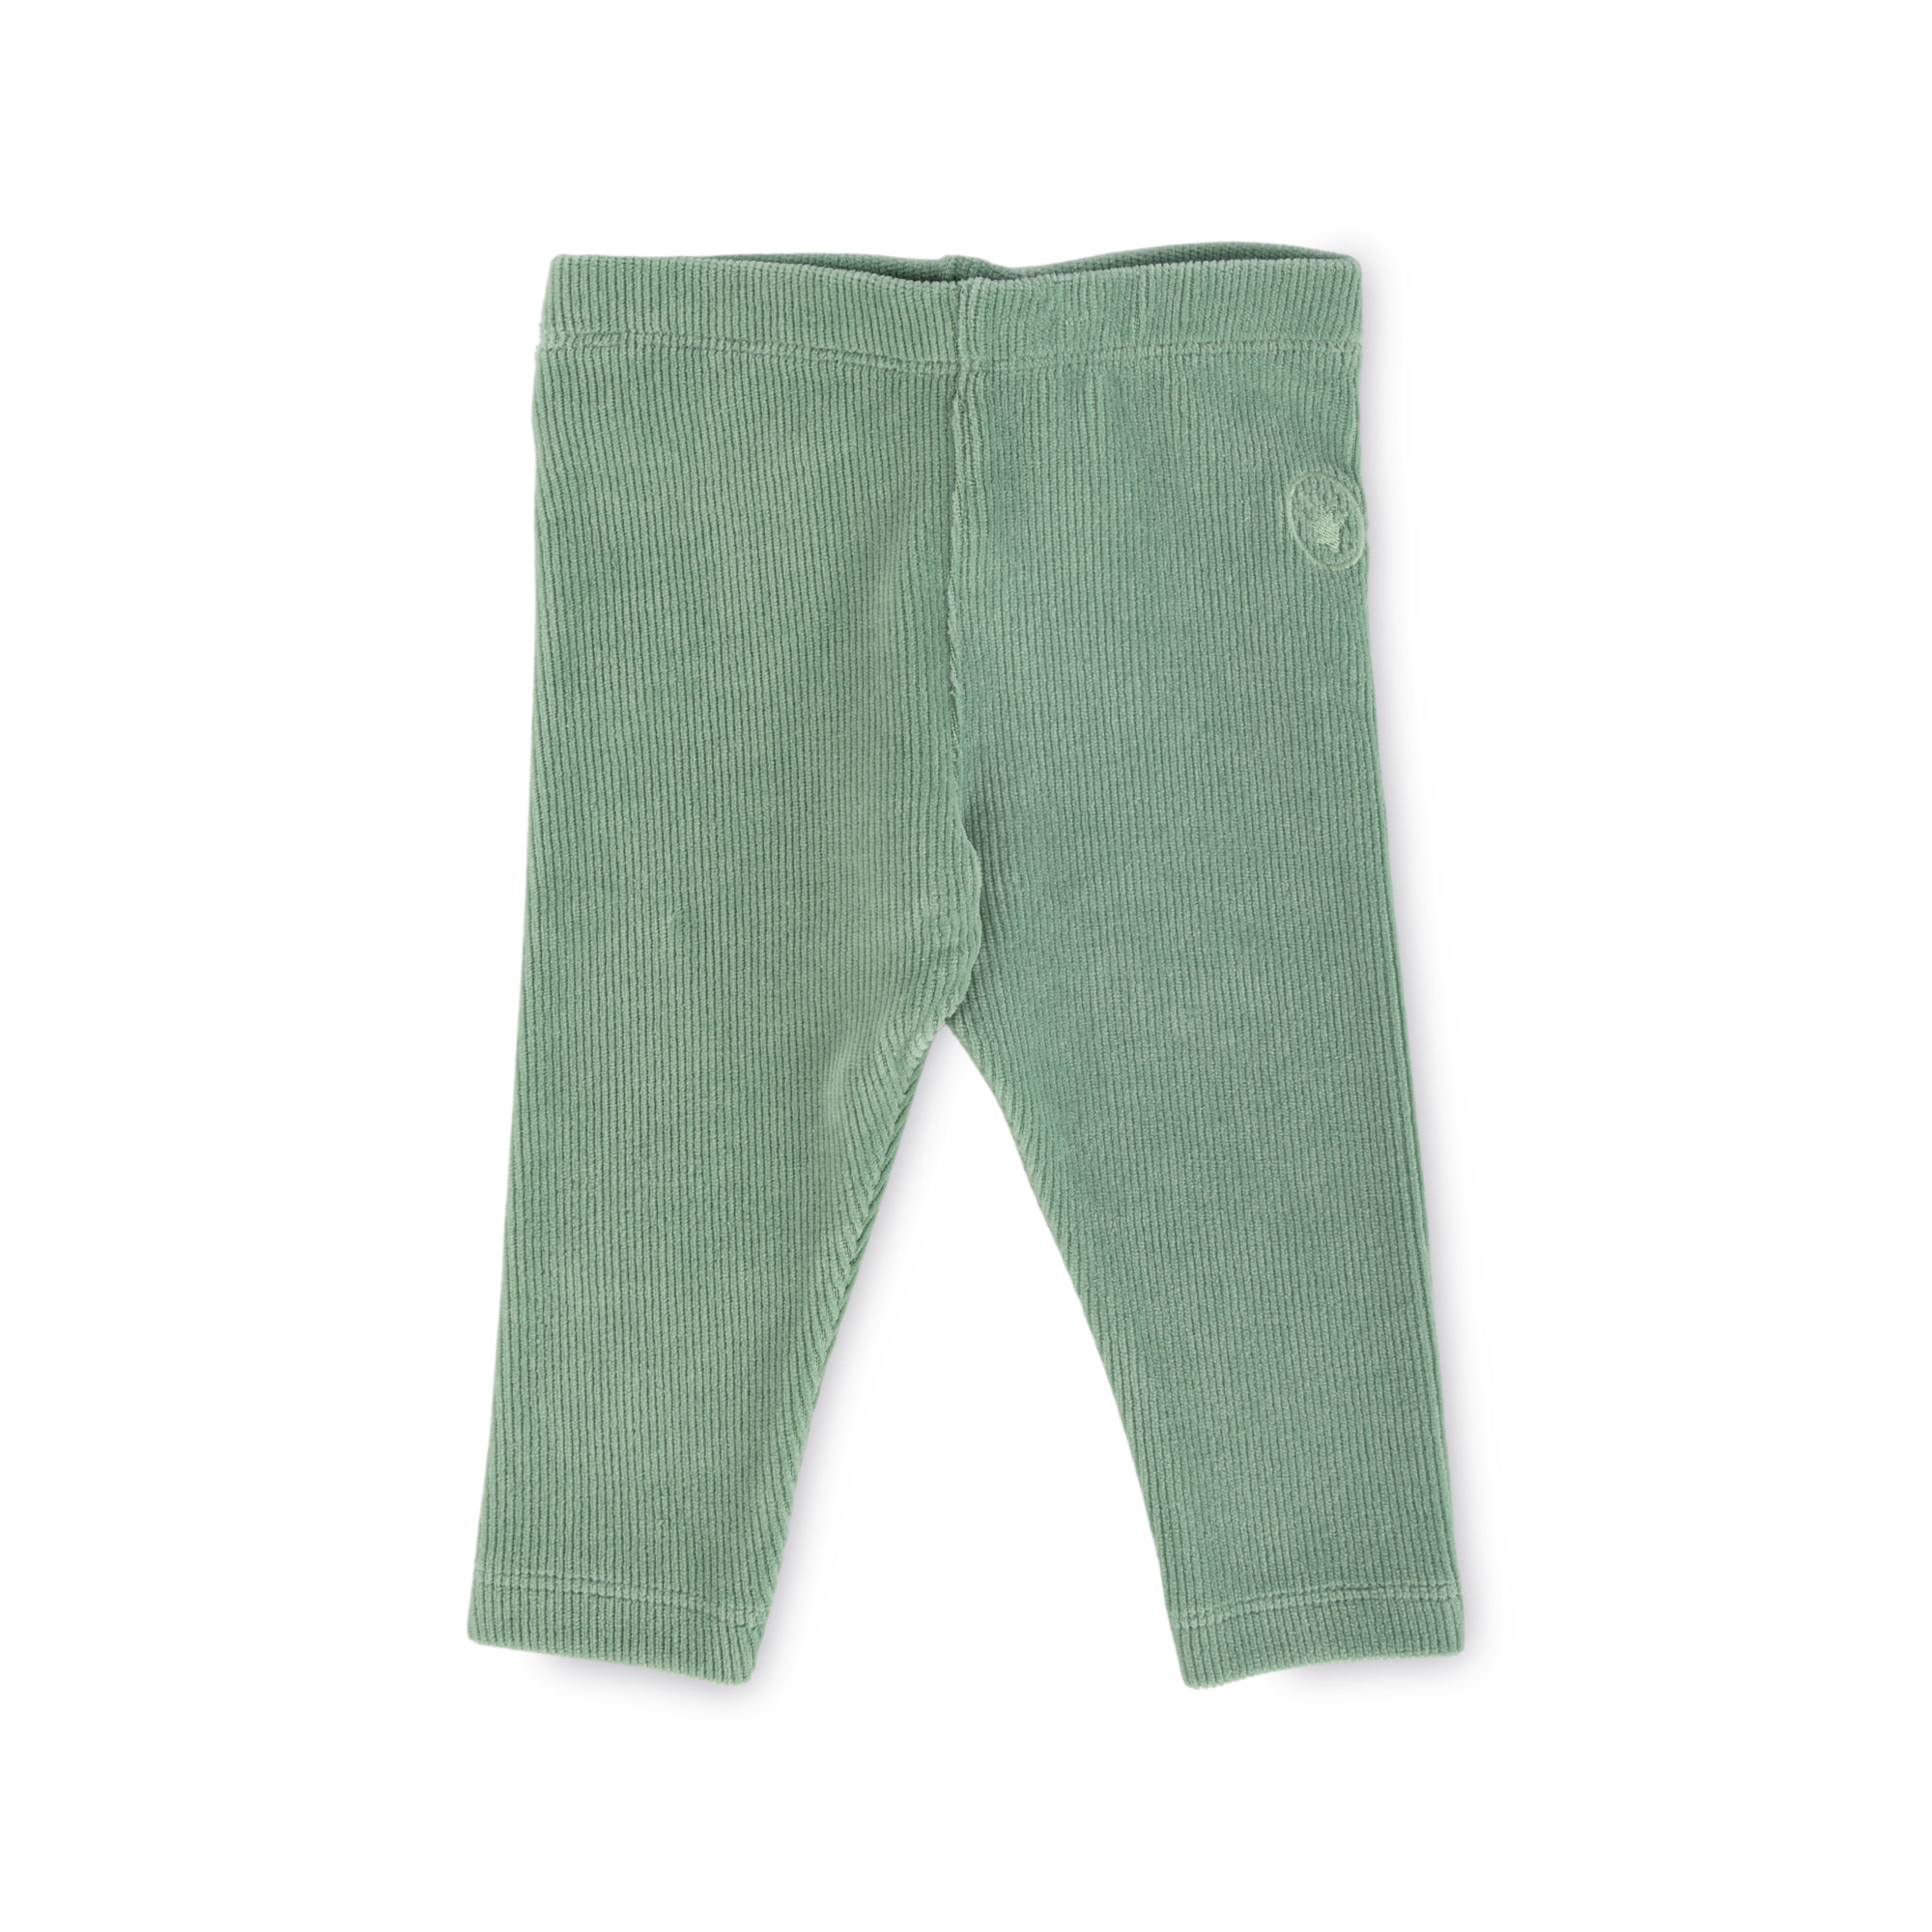 Stretchy soft baby corduroy leggings, mint green